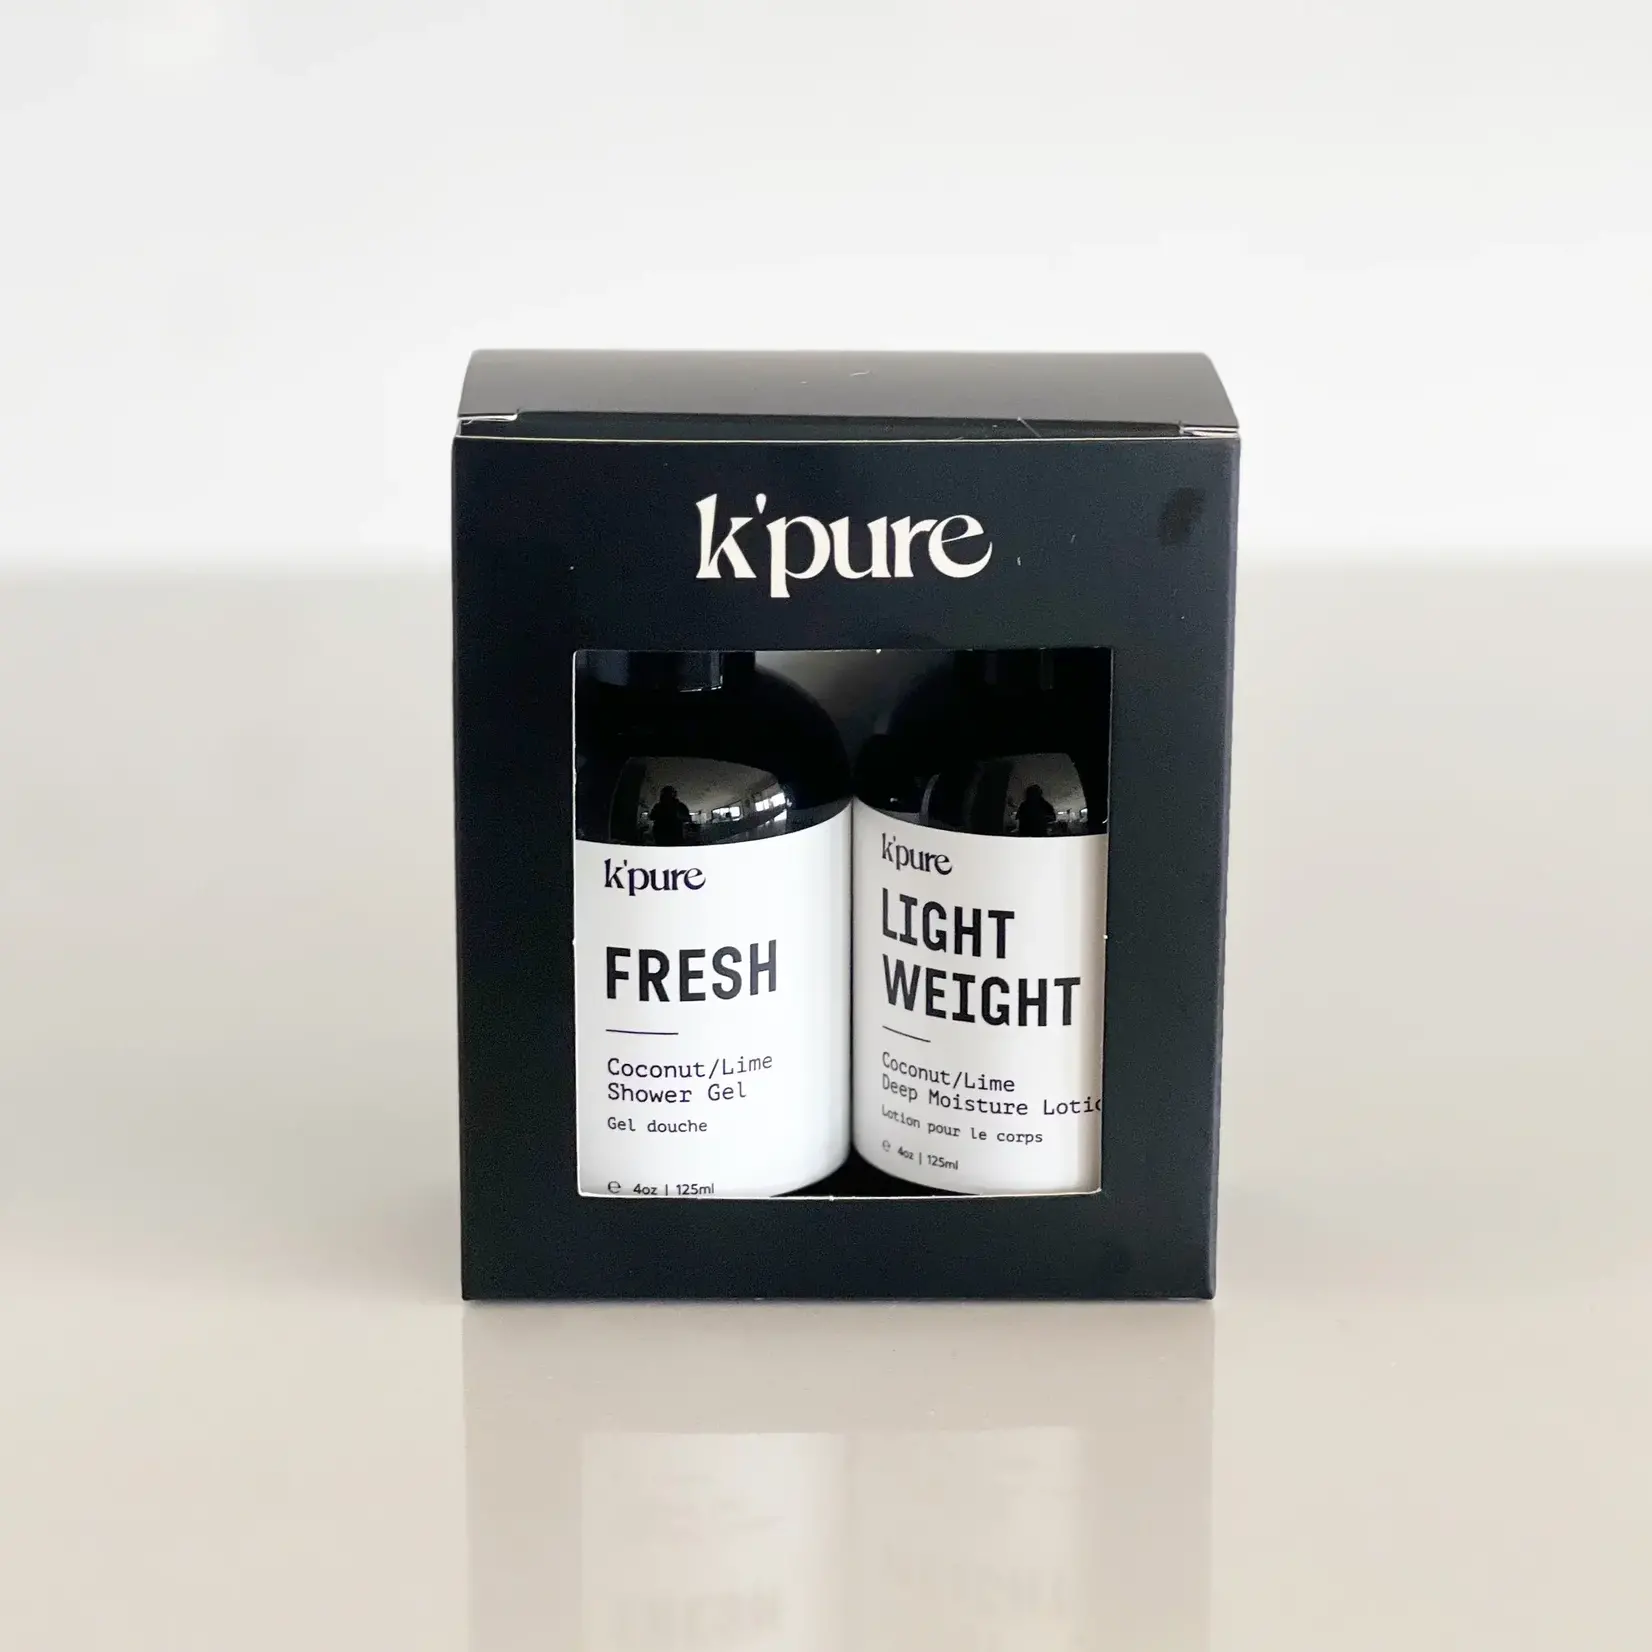 KPure Shower/Lotion Gift Box